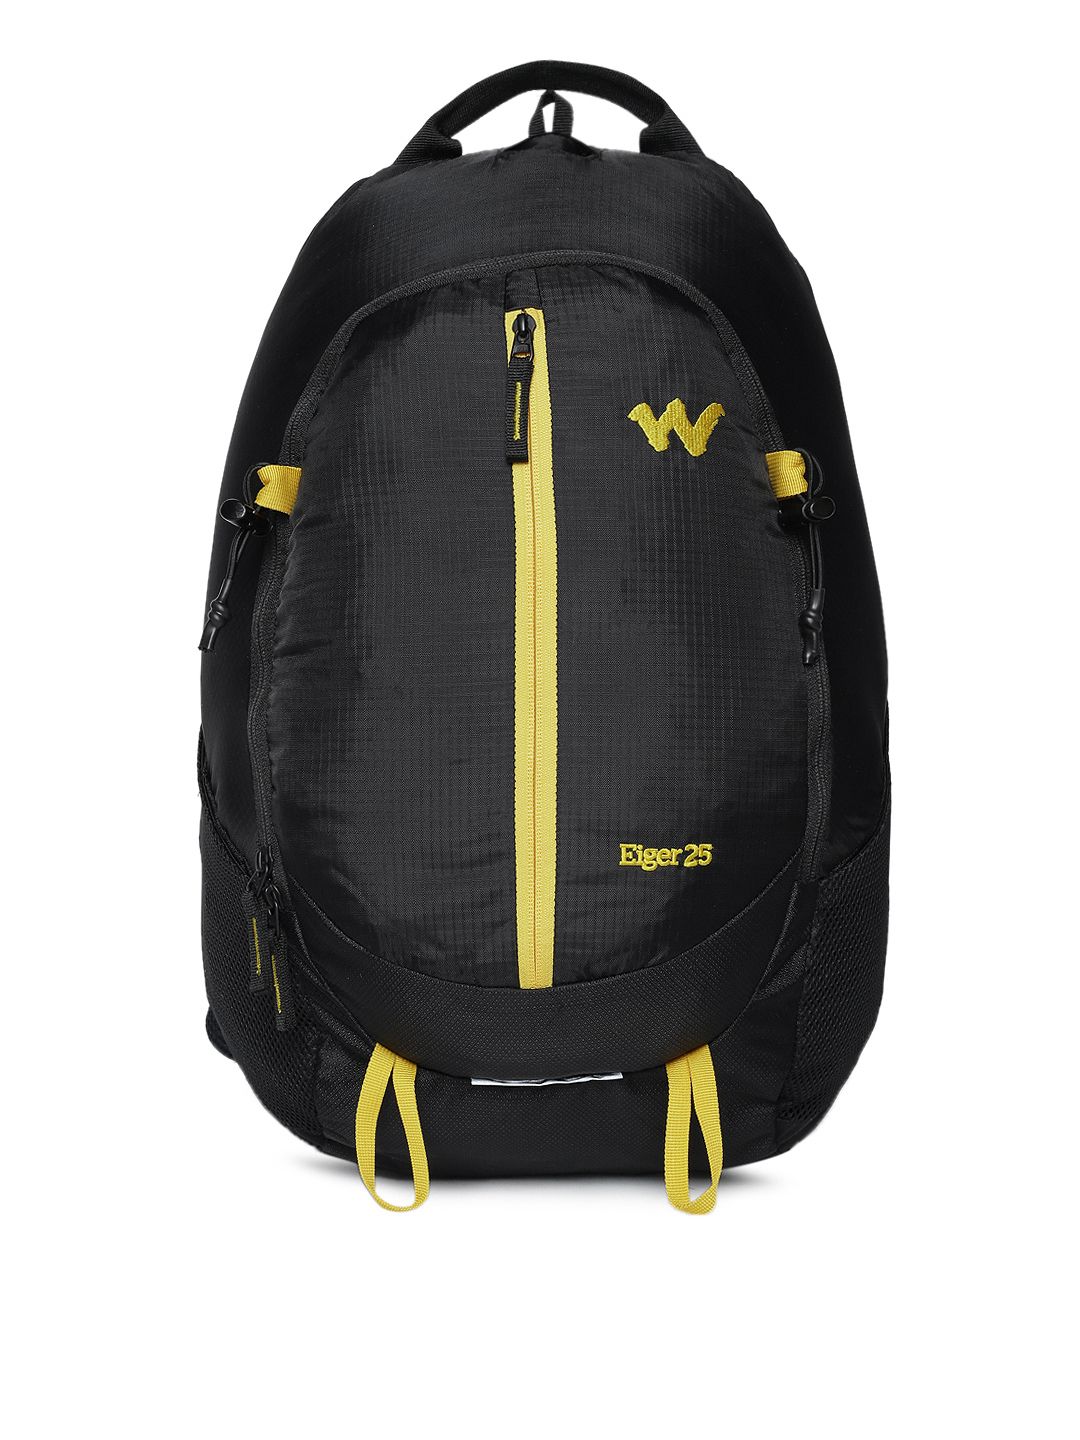 Wildcraft Unisex Black Eiger 25 Backpack Price in India